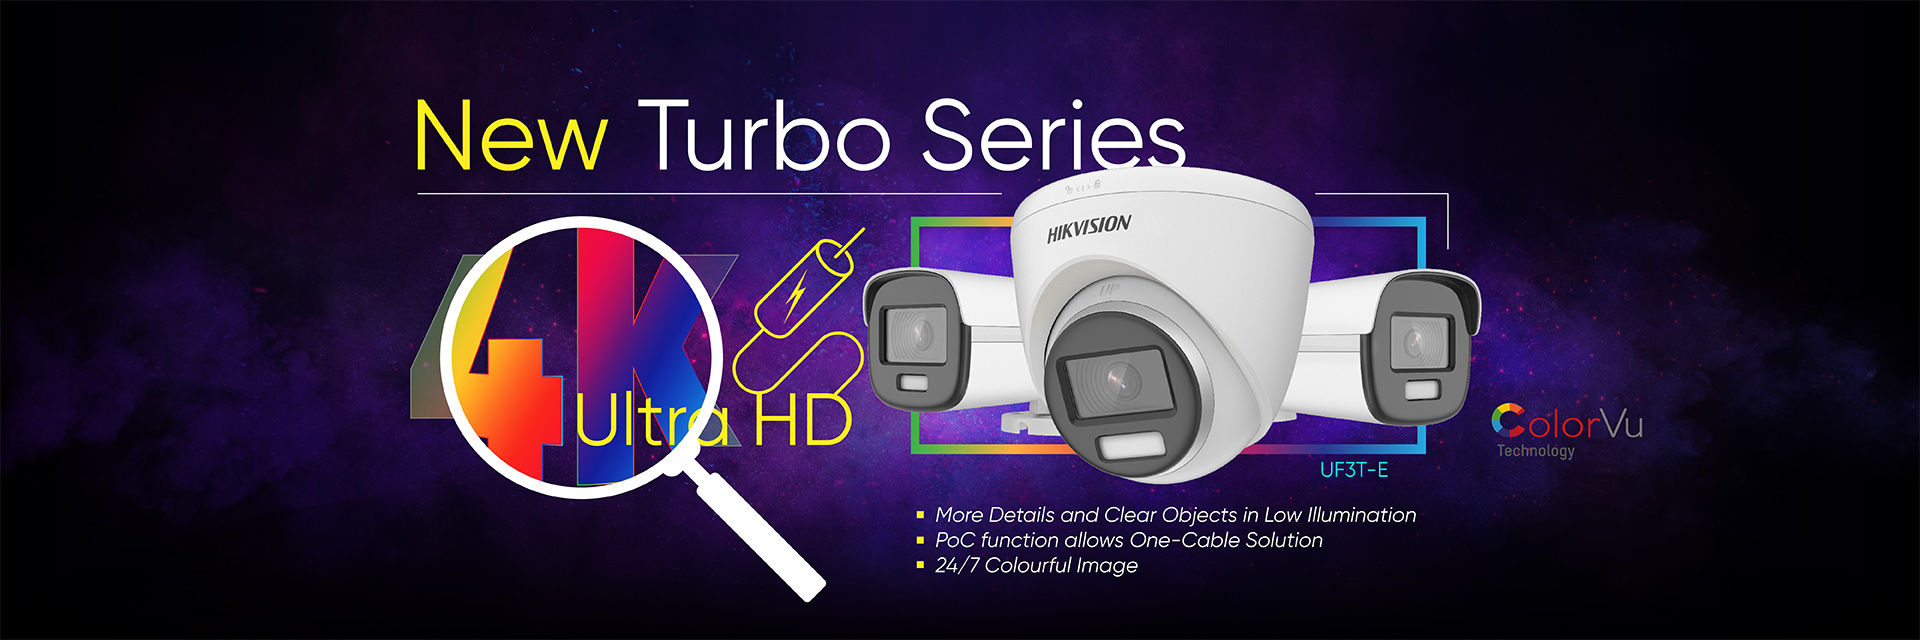 HIK_TurboHD-4K-ColorVu_UF3T-1920x640px-Desktop-01